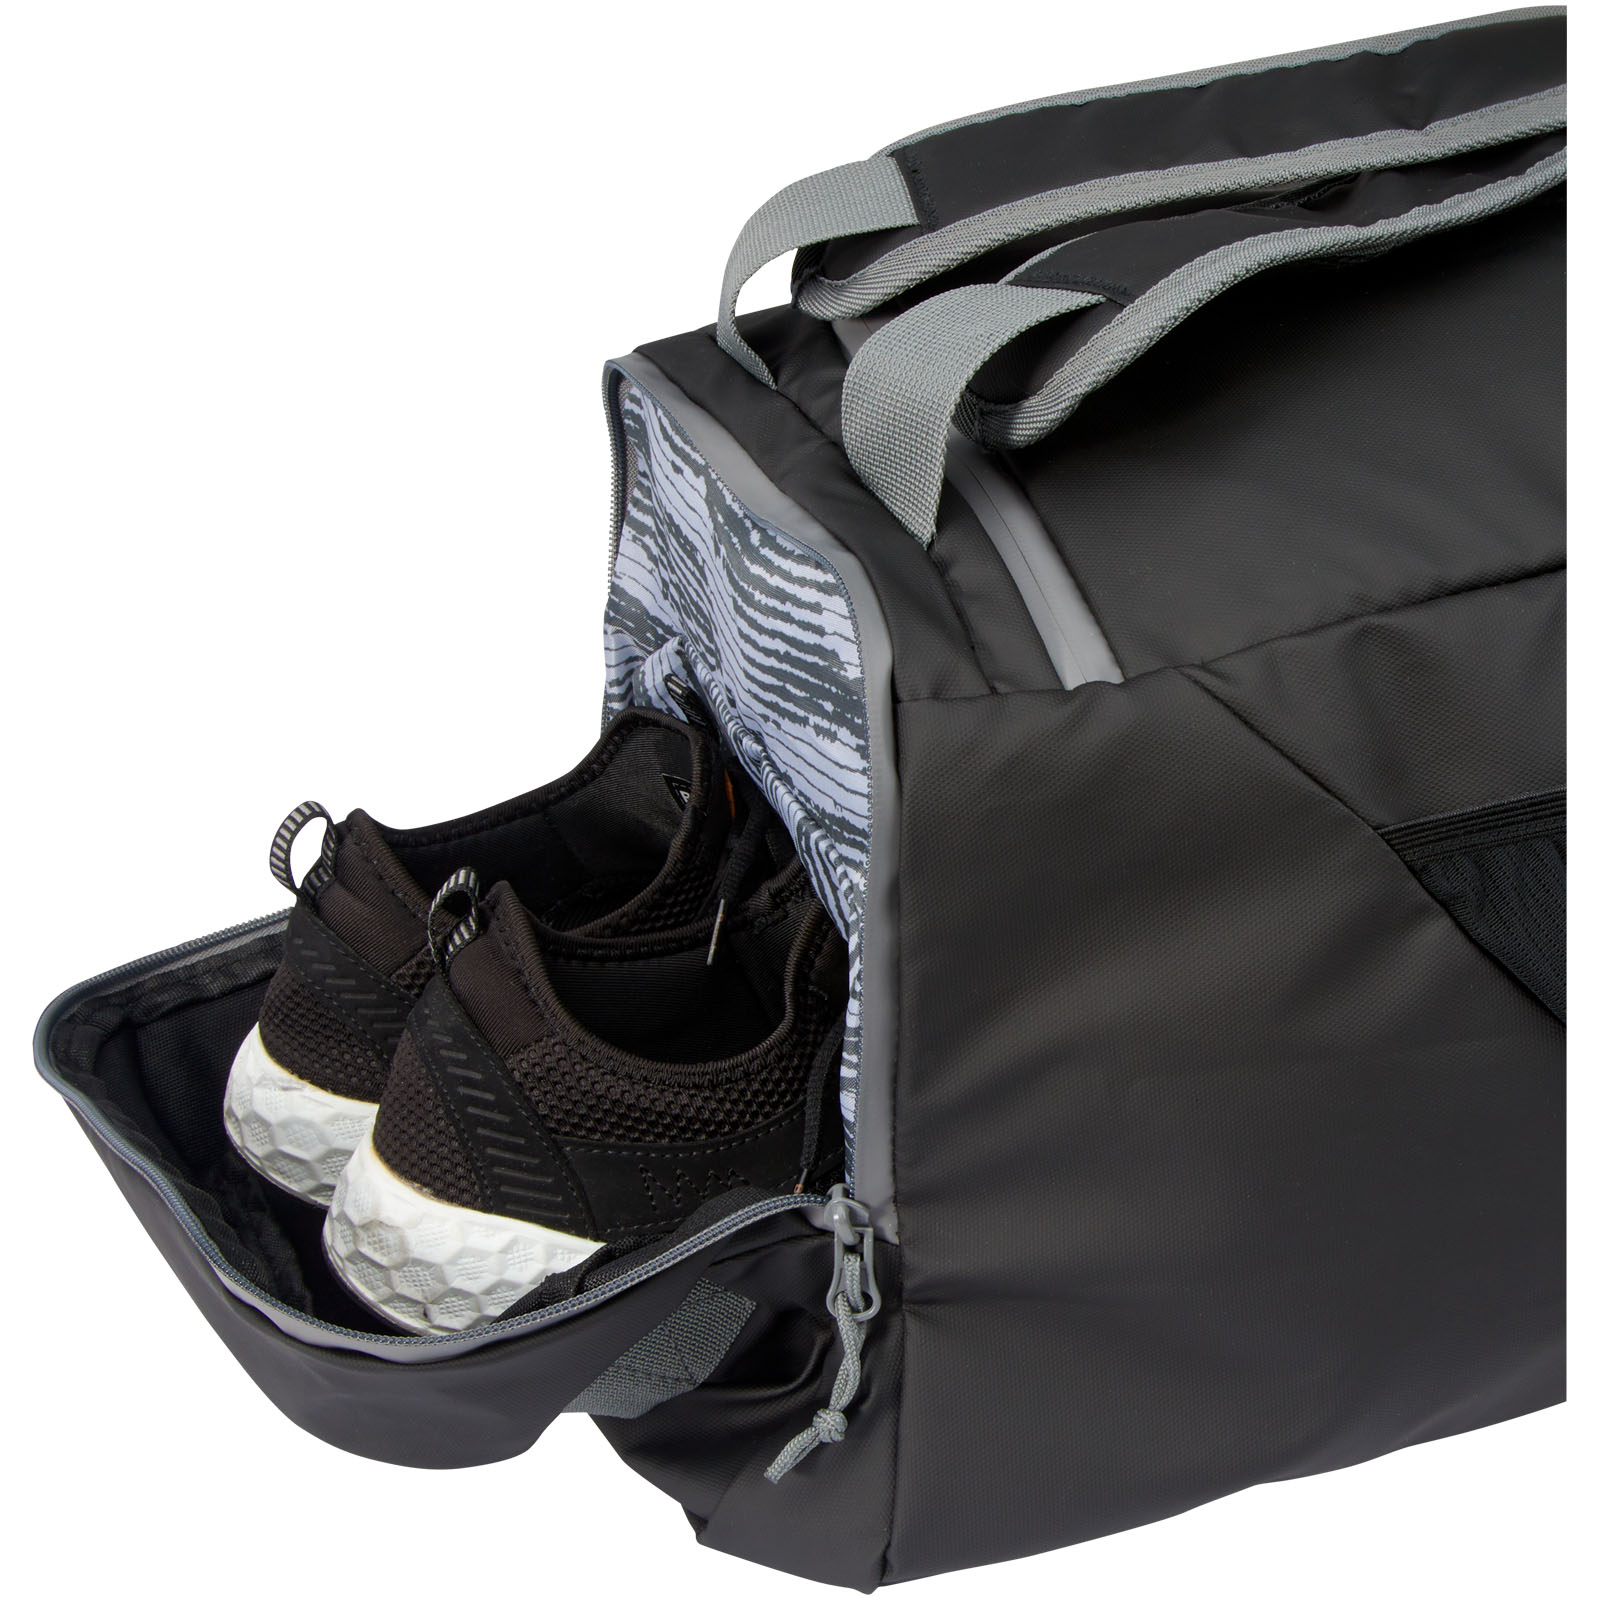 Advertising Travel bags - Aqua GRS recycled water resistant duffel backpack 35L - 5